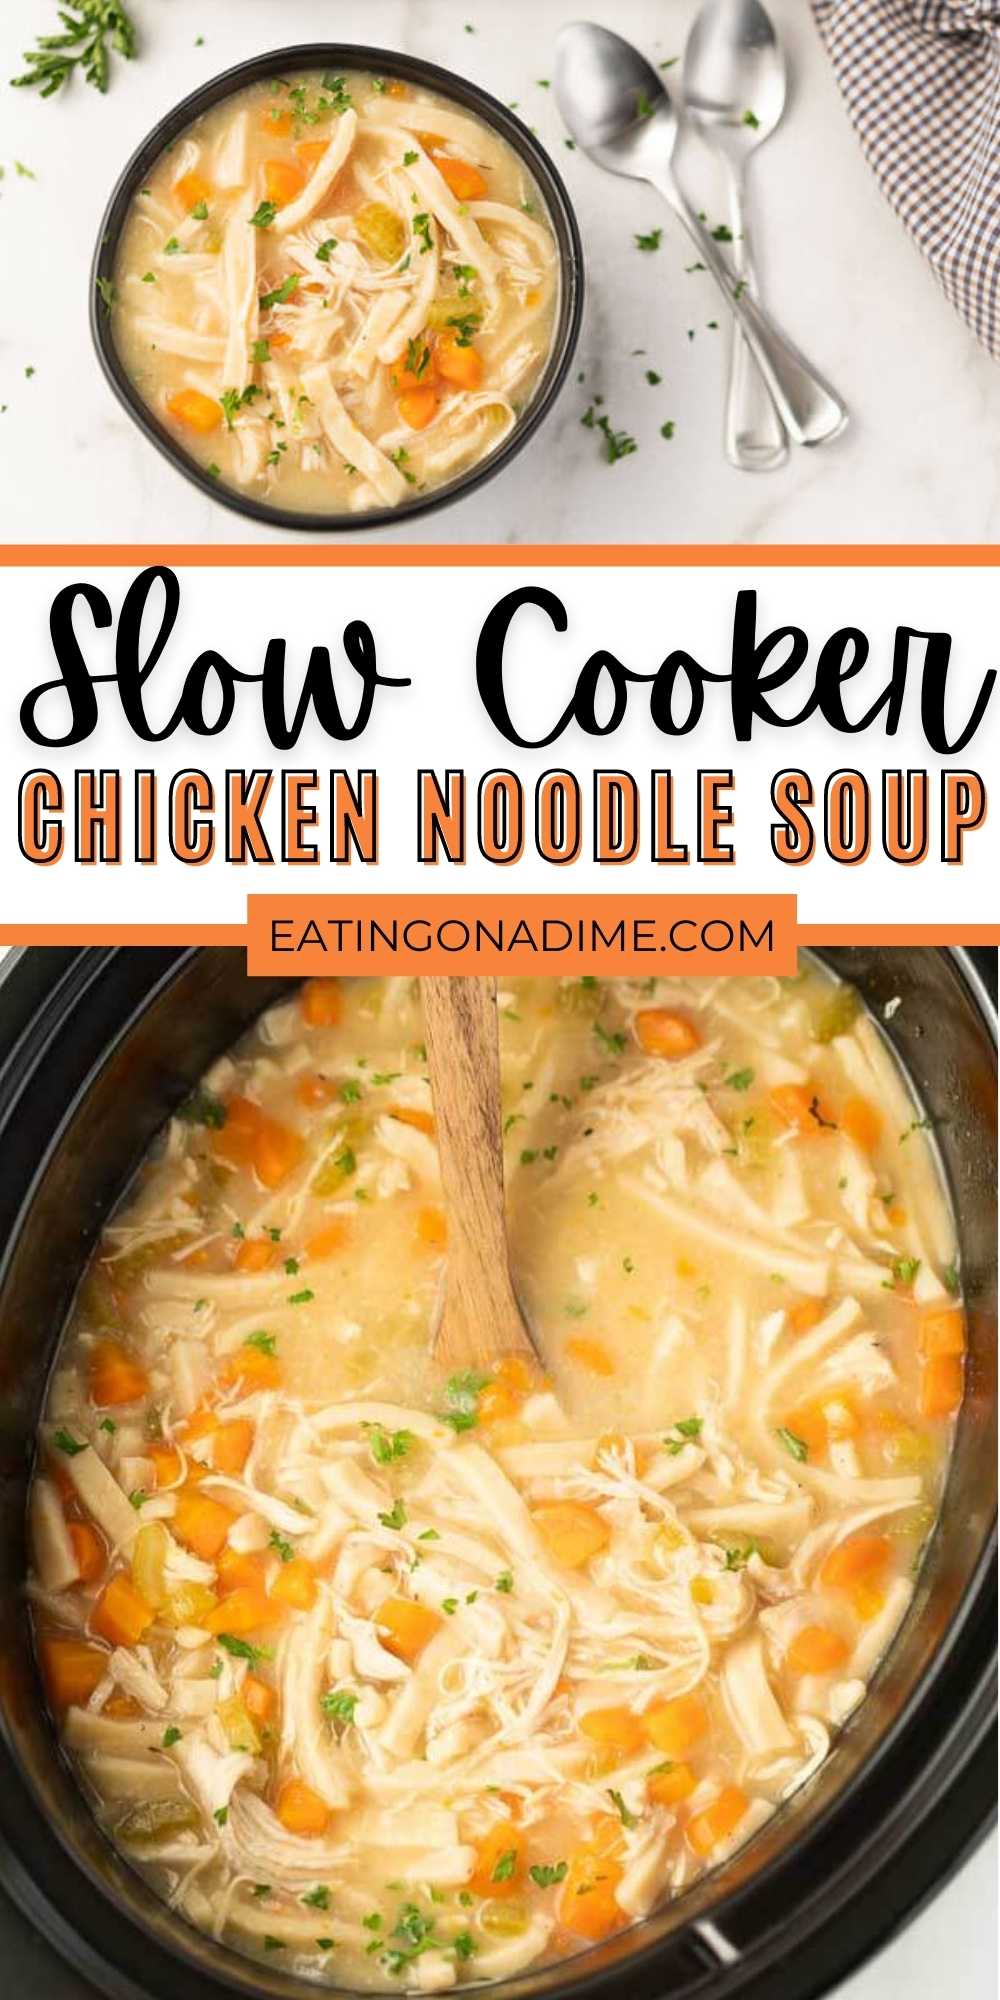 https://www.eatingonadime.com/wp-content/uploads/2021/06/CP-Chicken-Noodle-Soup-Pin-3-1.jpg